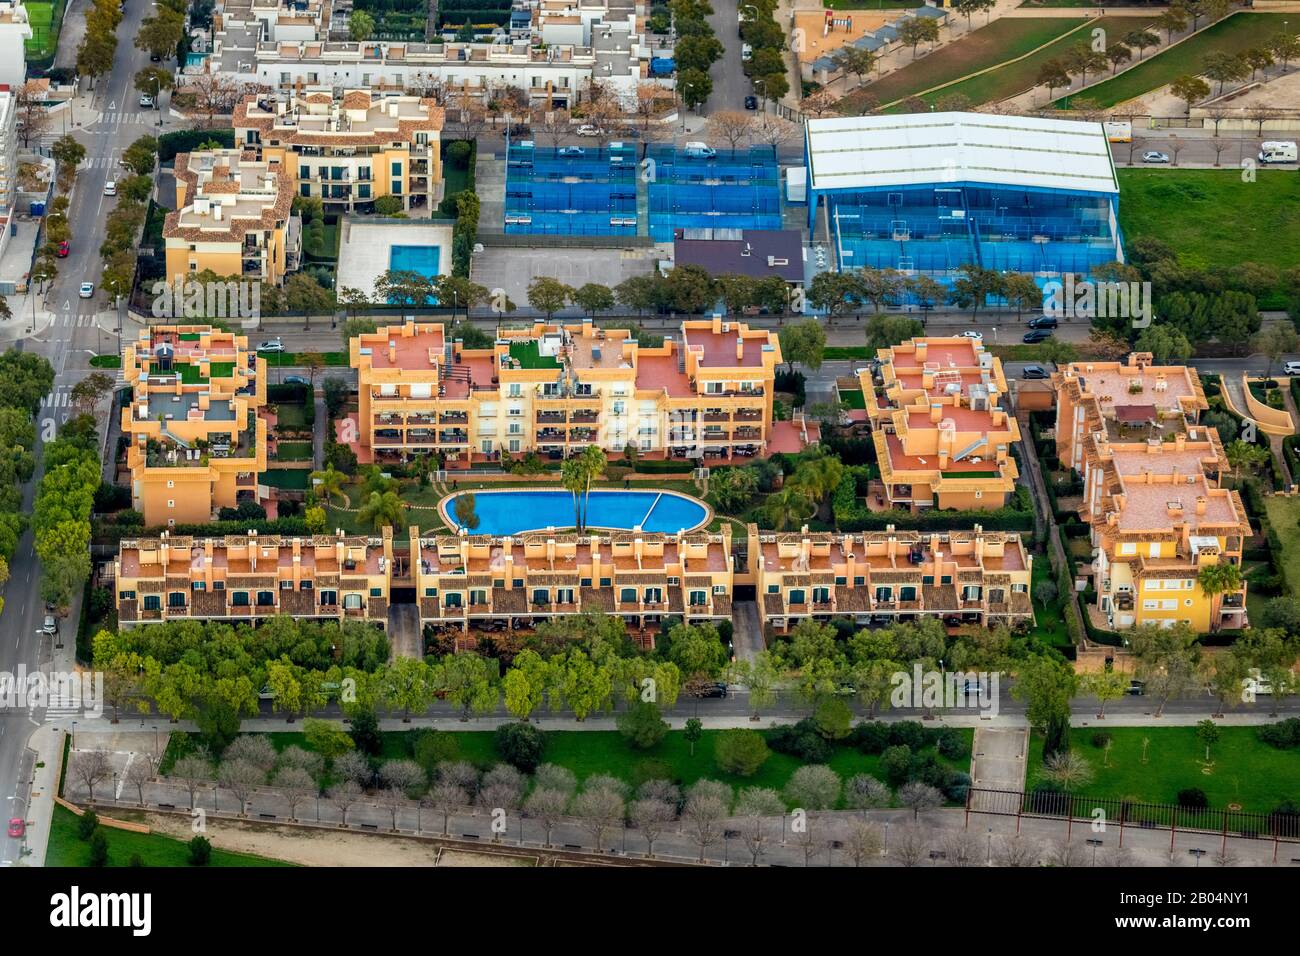 Aerial view, residences with pool, Palma padel, padel tennis court, Palma, Mallorca, Spain, Europe, Balearic Islands, Carrer de Castellà la Manxa, ES, Stock Photo